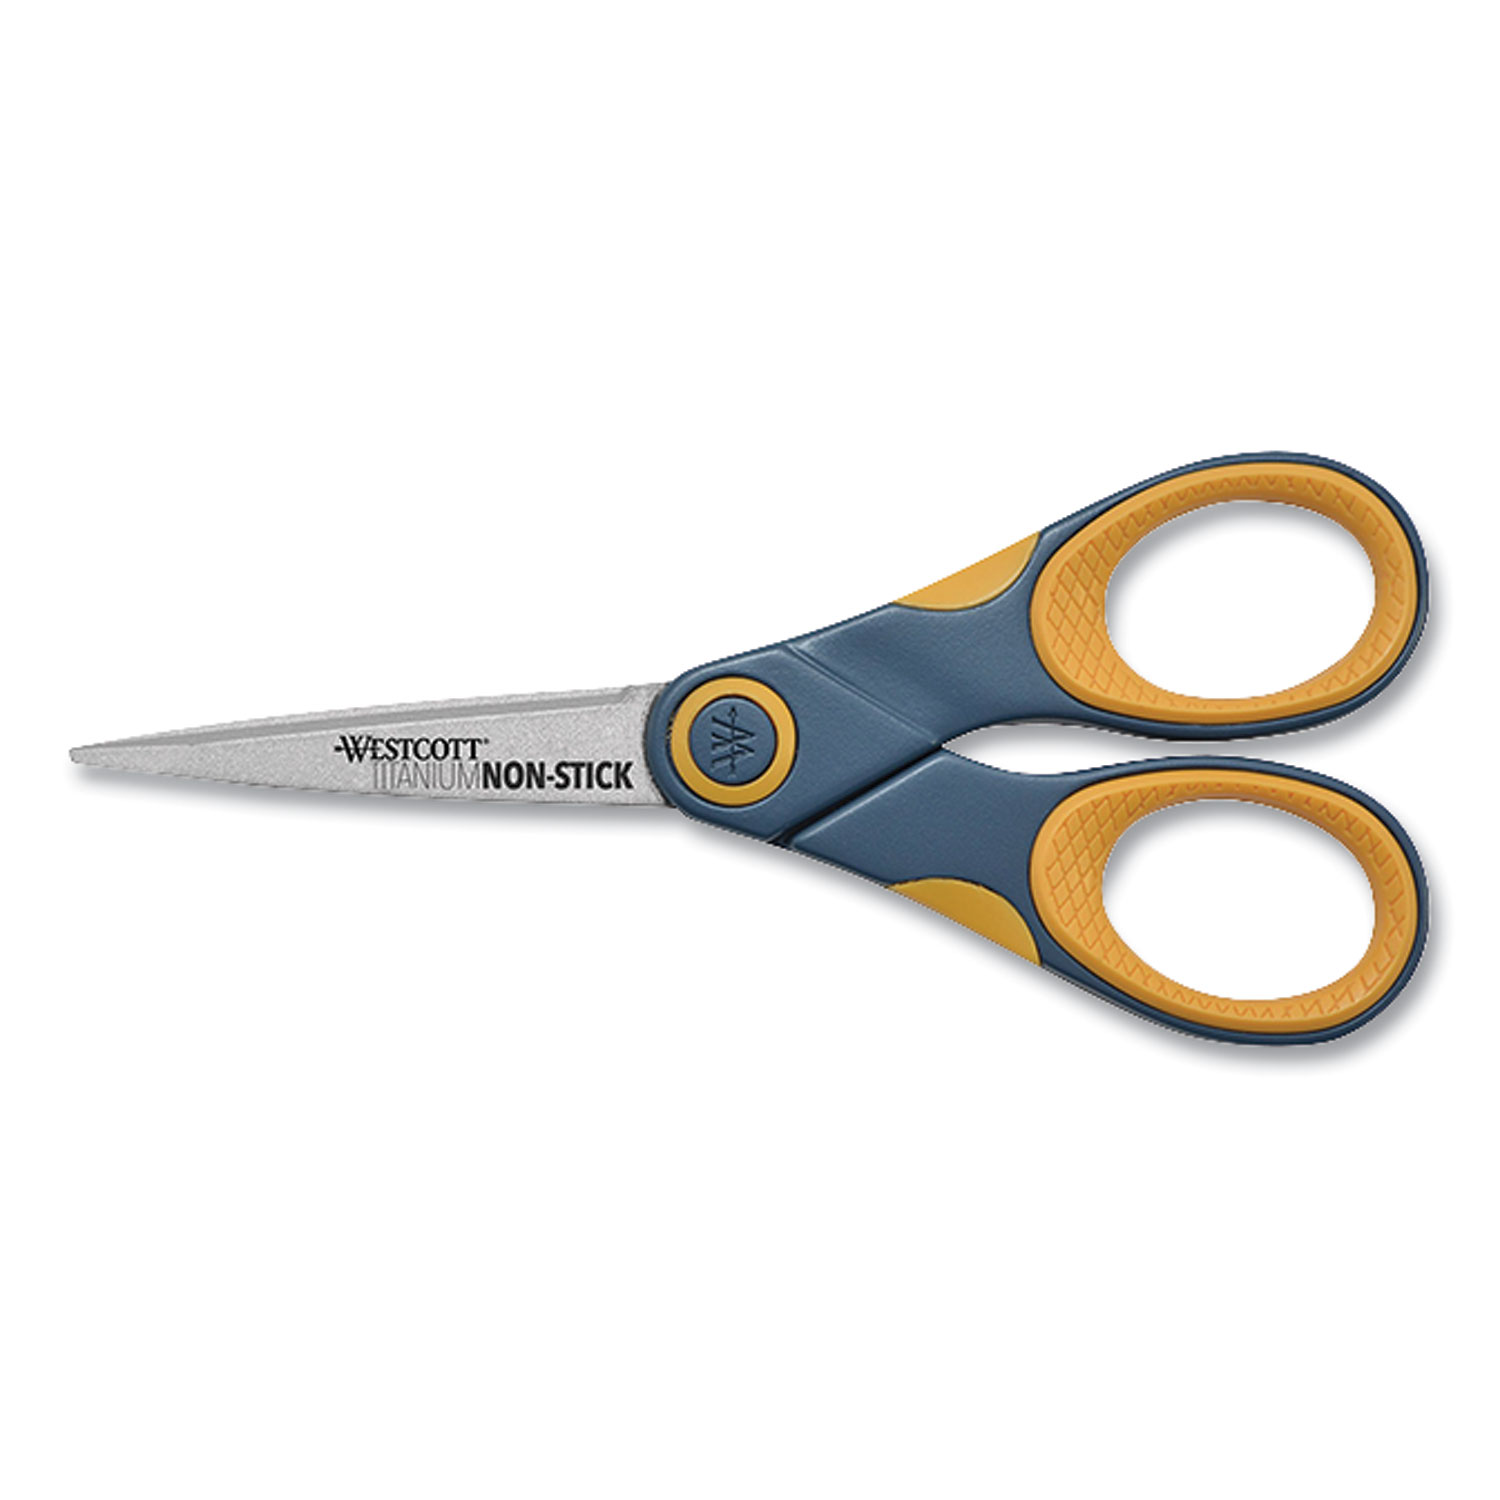  Westcott 14881 Titanium Bonded Scissors, 5 Long, Gray/Orange Straight Handle (WTC791185) 